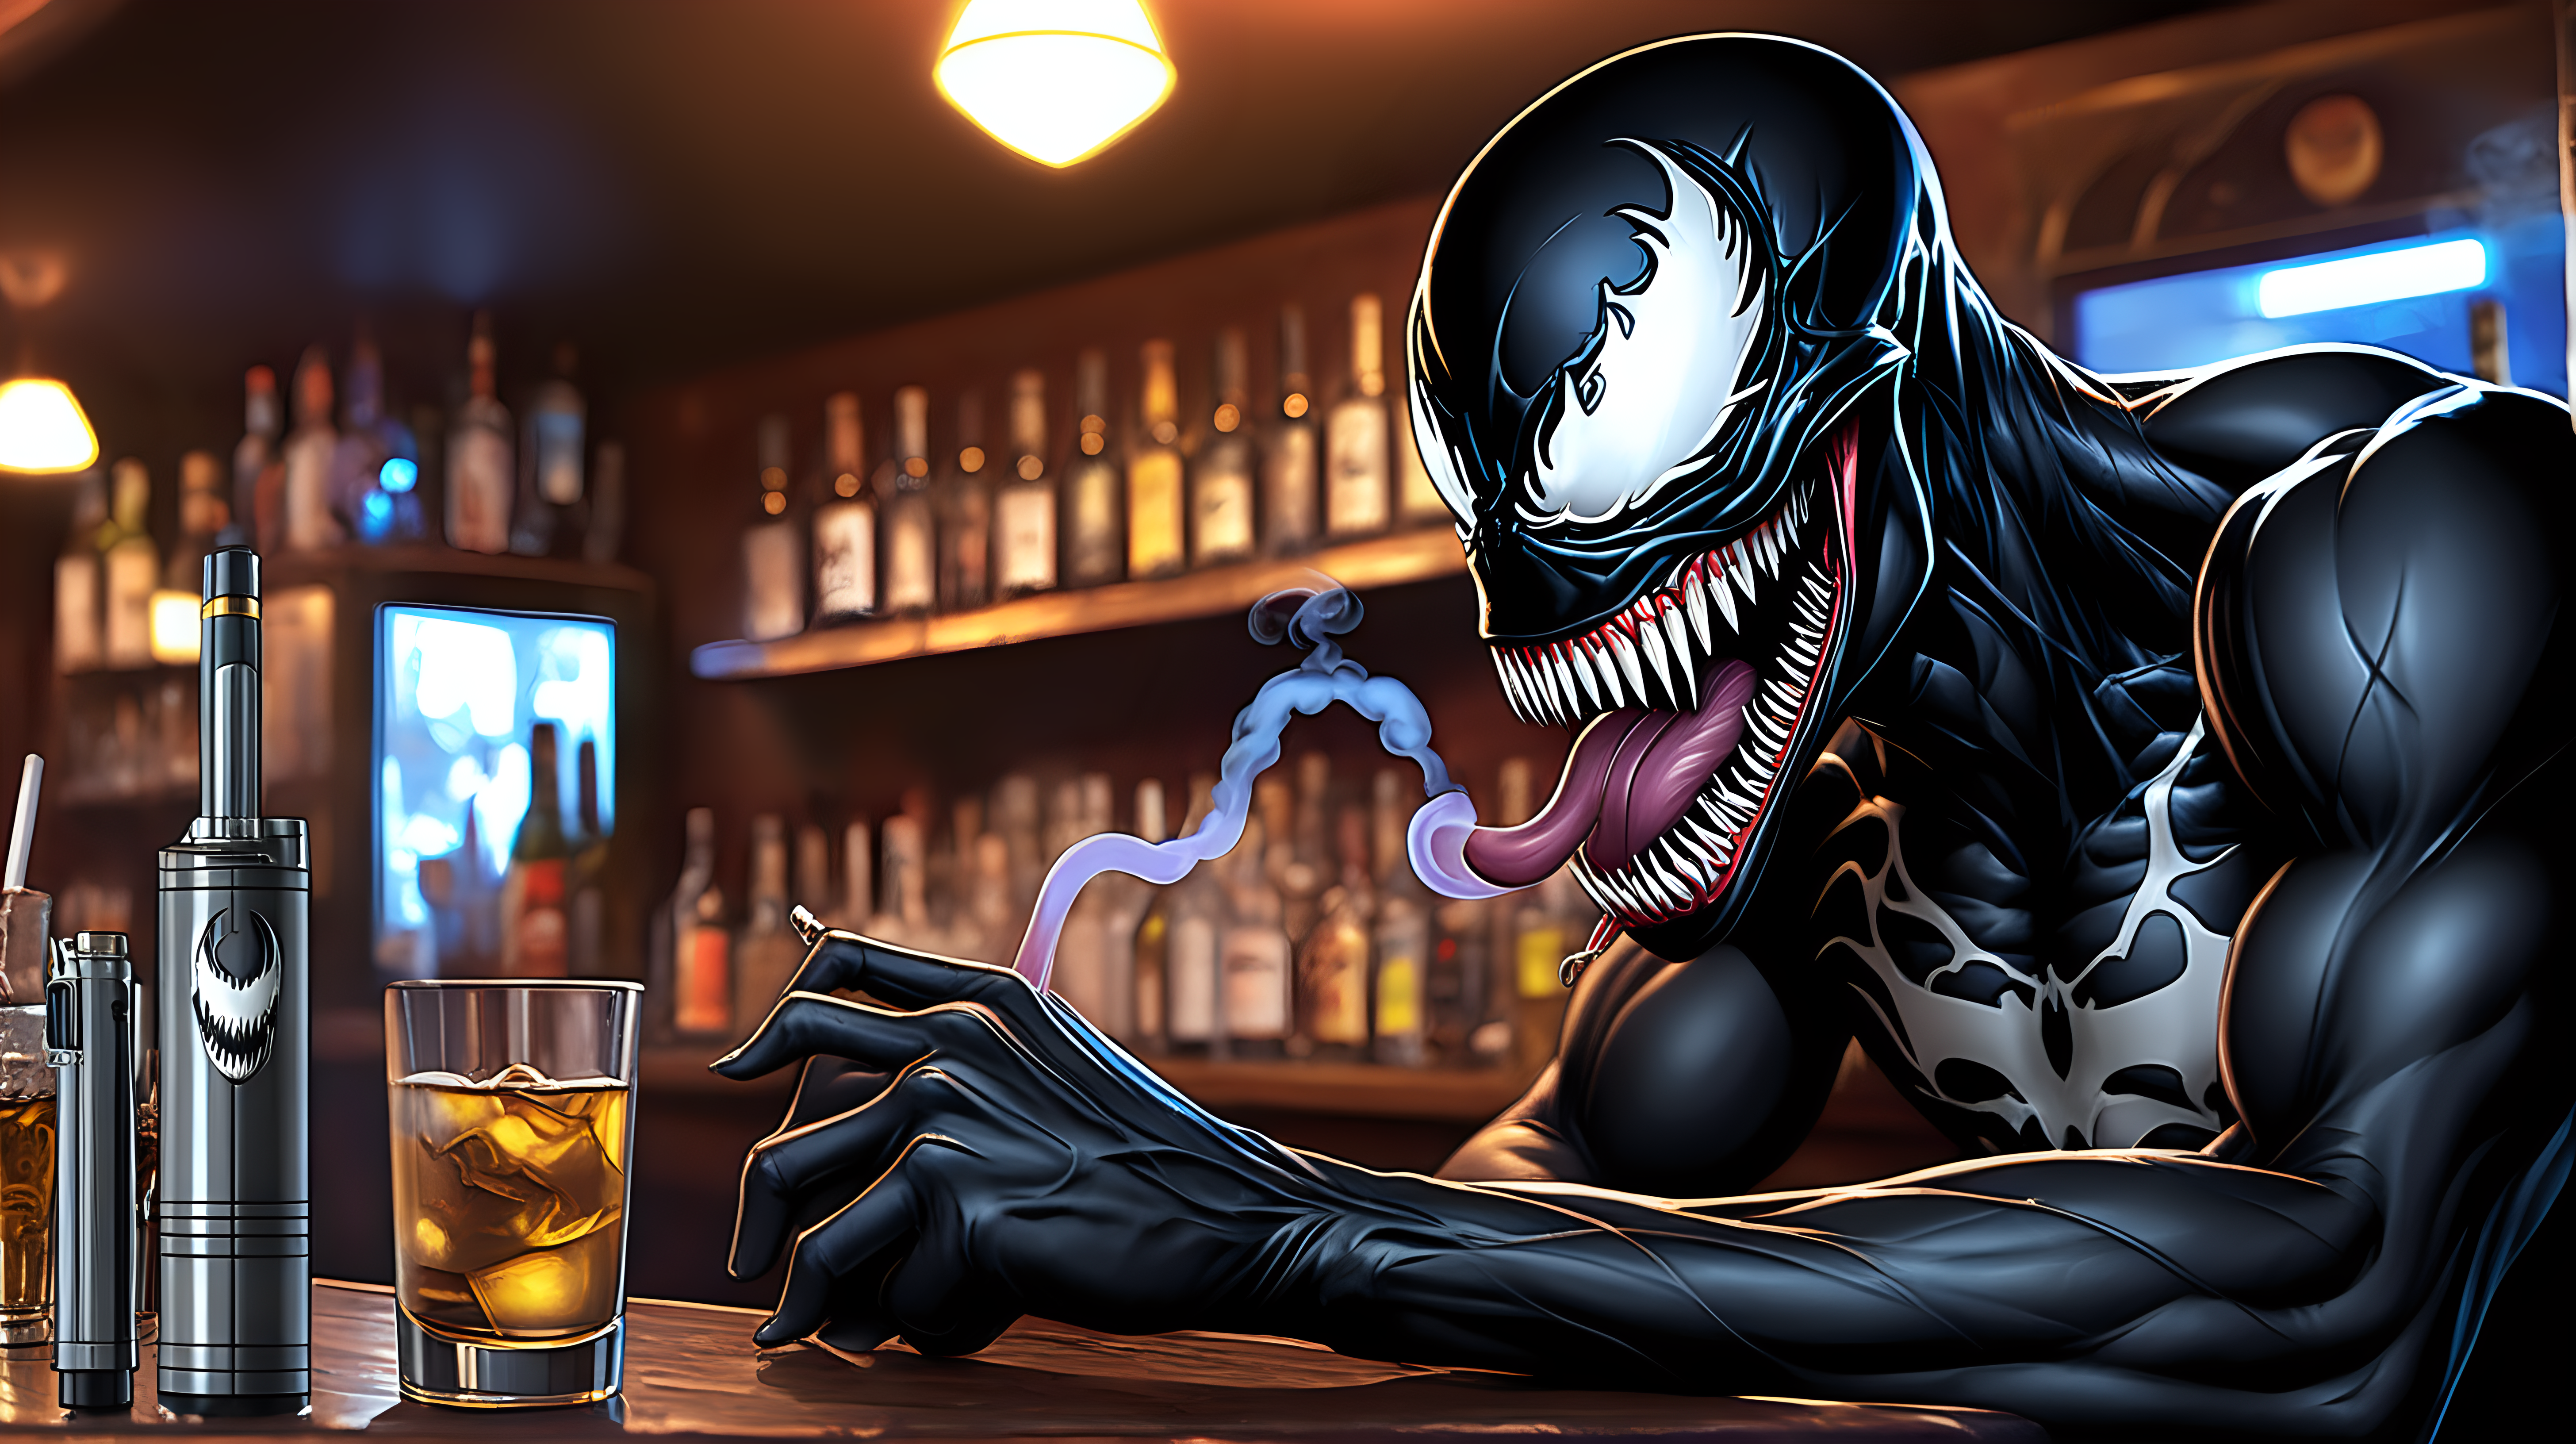 Venom vaping at a bar